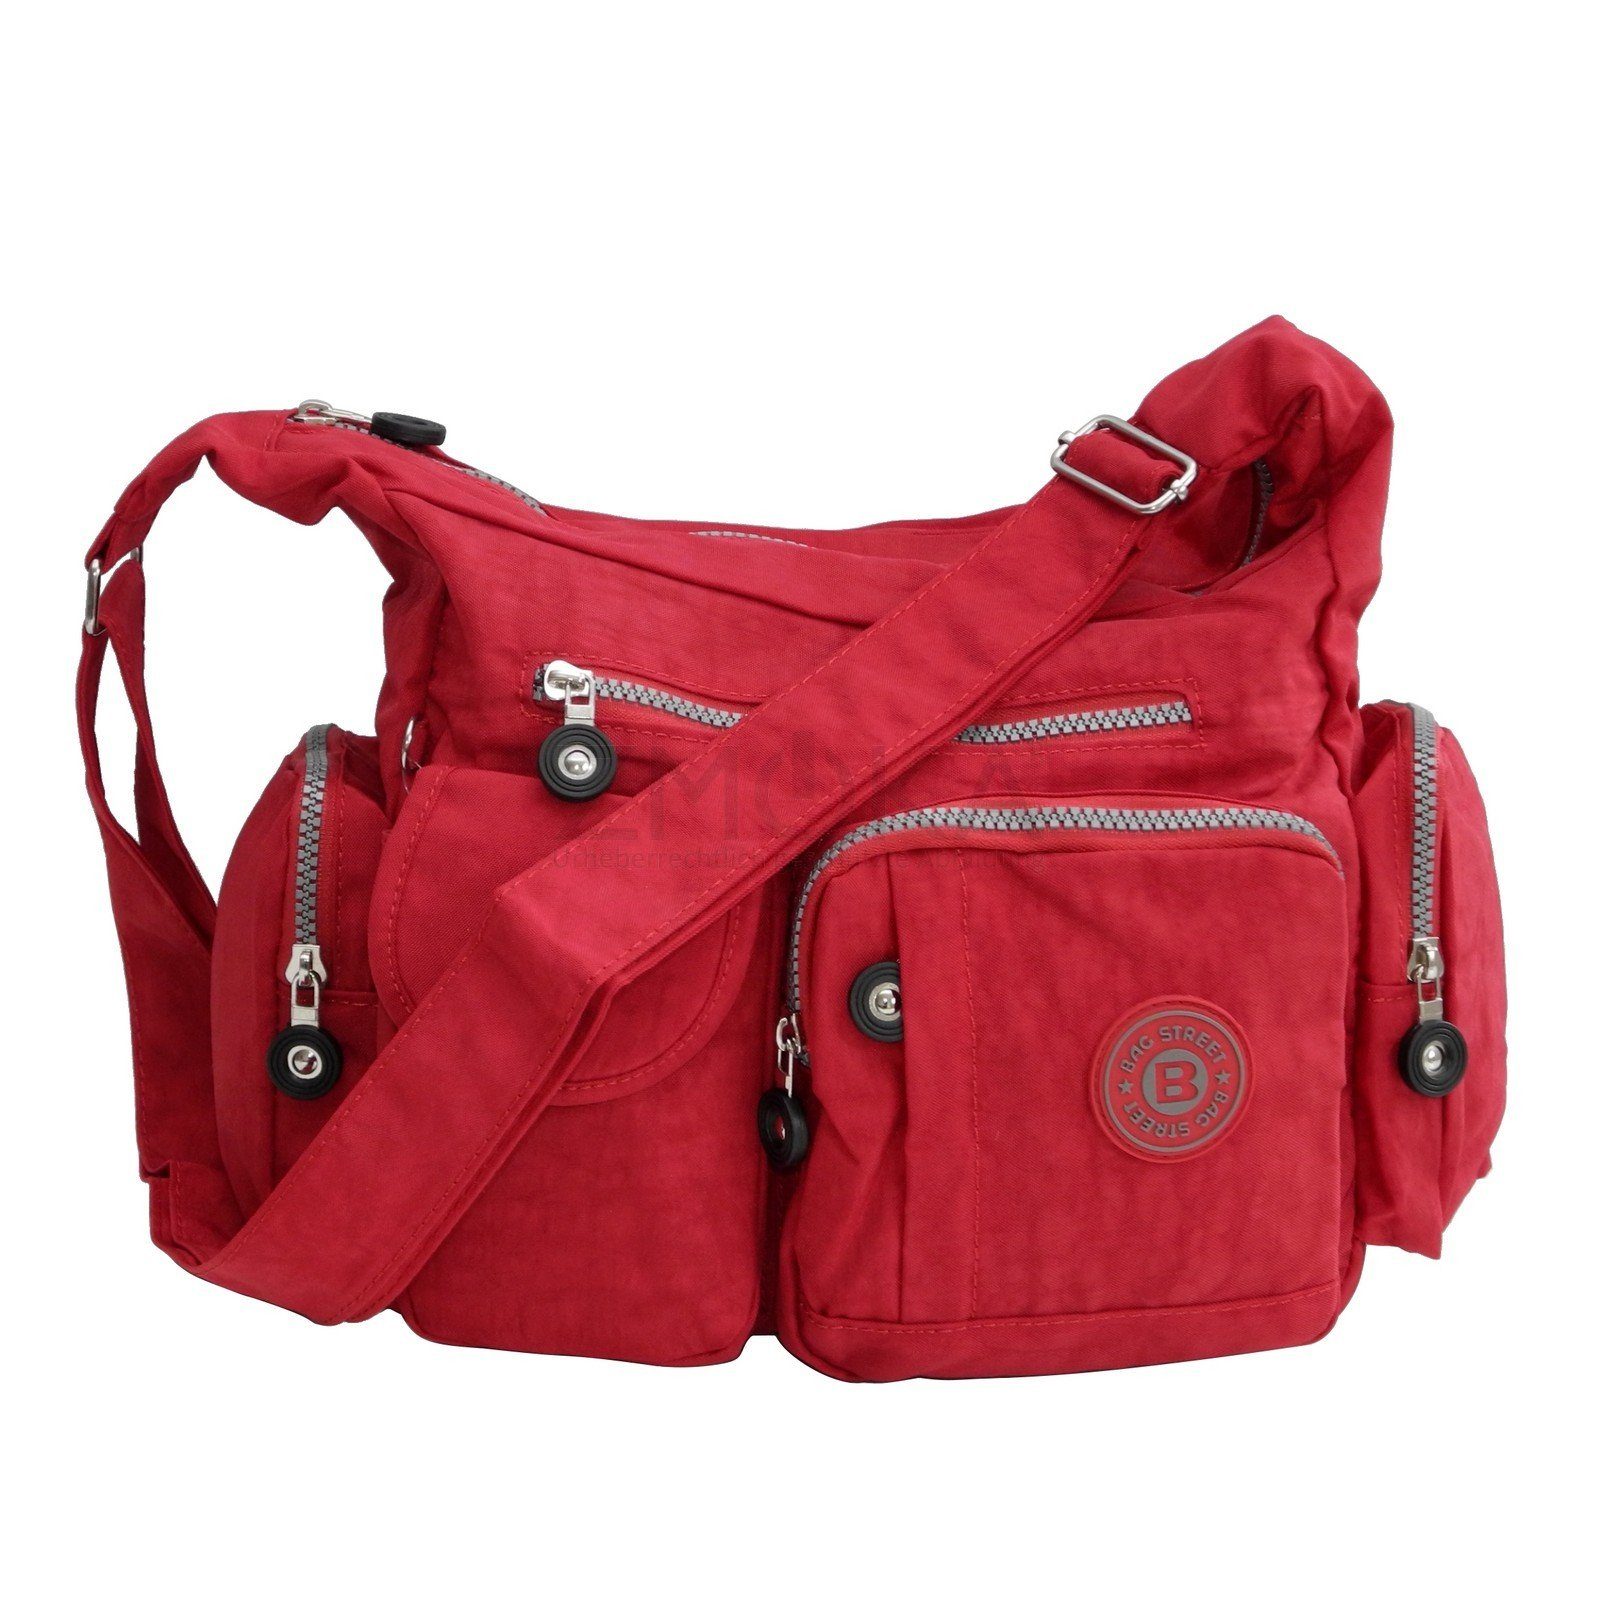 BAG STREET Umhängetasche Bag Street - Crossbody Bag Stofftasche Umhängetasche Auswahl Rot